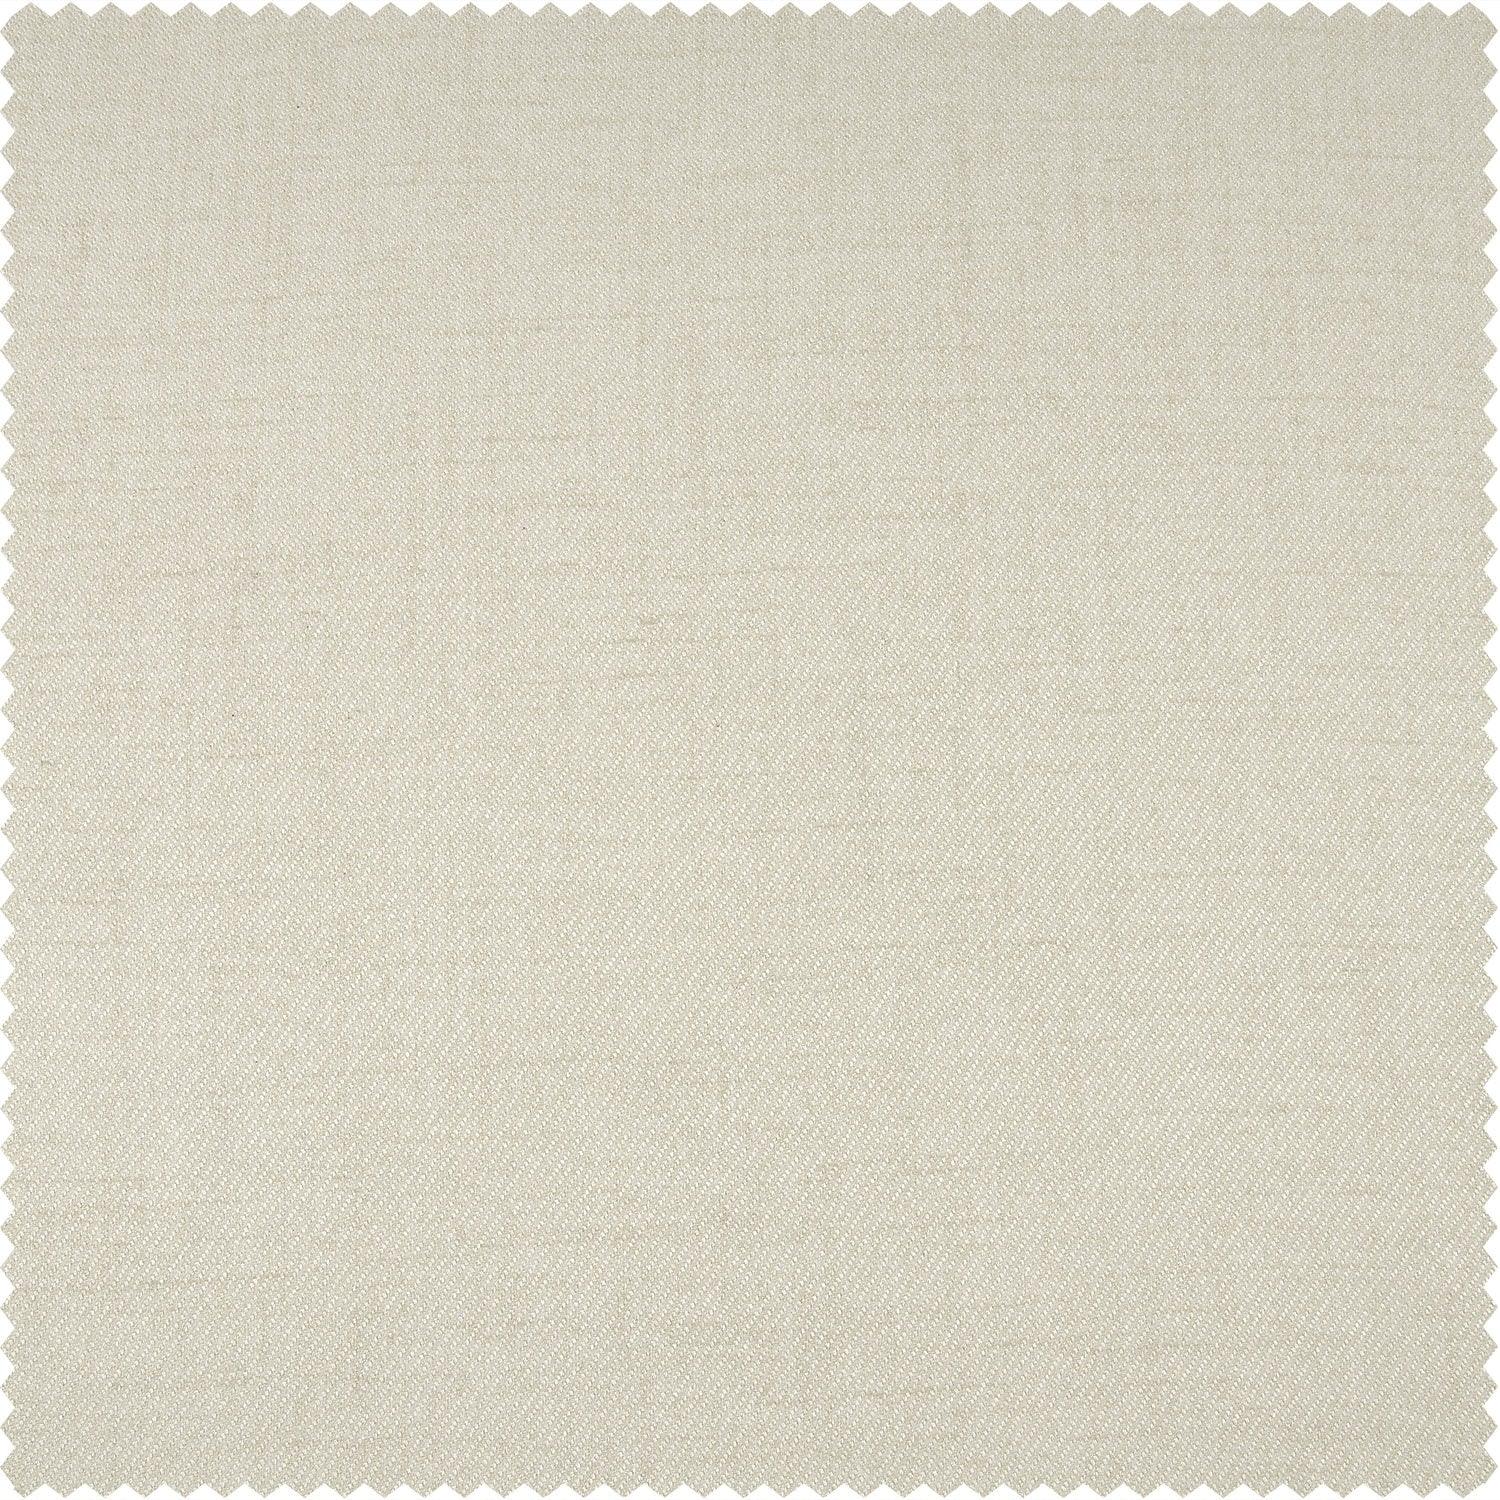 Creamy Ivory French Pleat Heathered Woolen Weave Room Darkening Curtain